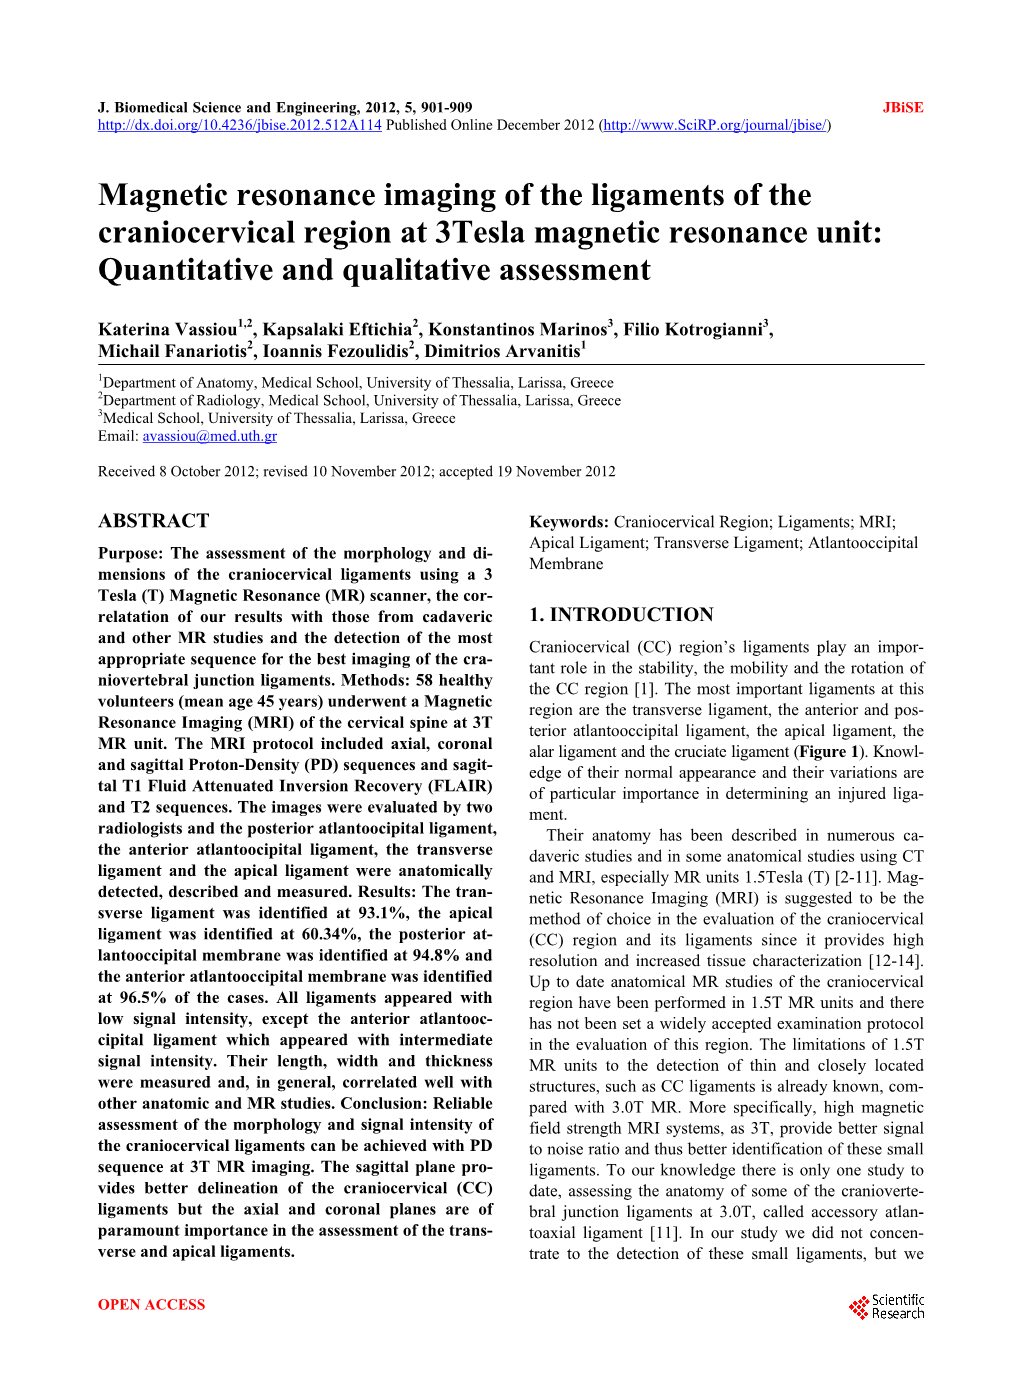 Magnetic Resonance Imaging of the Ligaments of the Craniocervical Region at 3Tesla Magnetic Resonance Unit: Quantitative and Qualitative Assessment